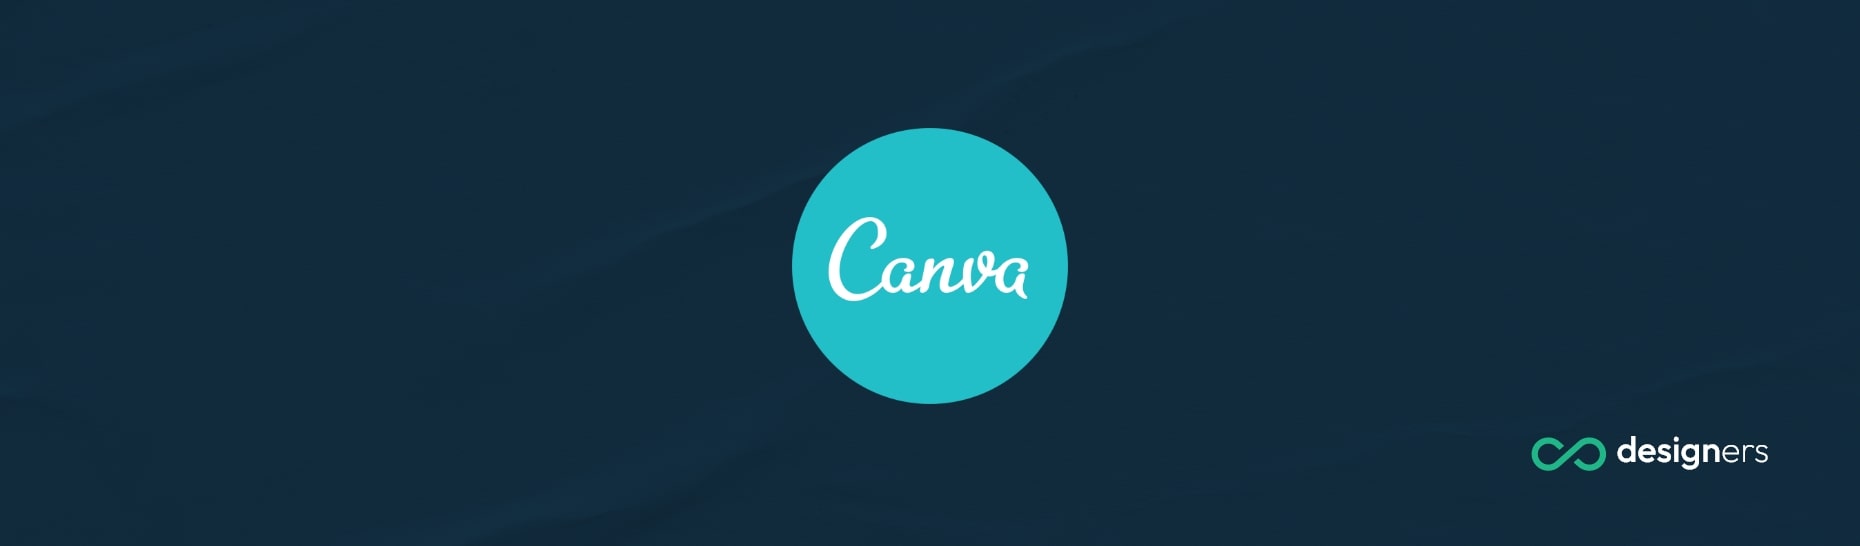 How Do I Link Pinterest to Canva?